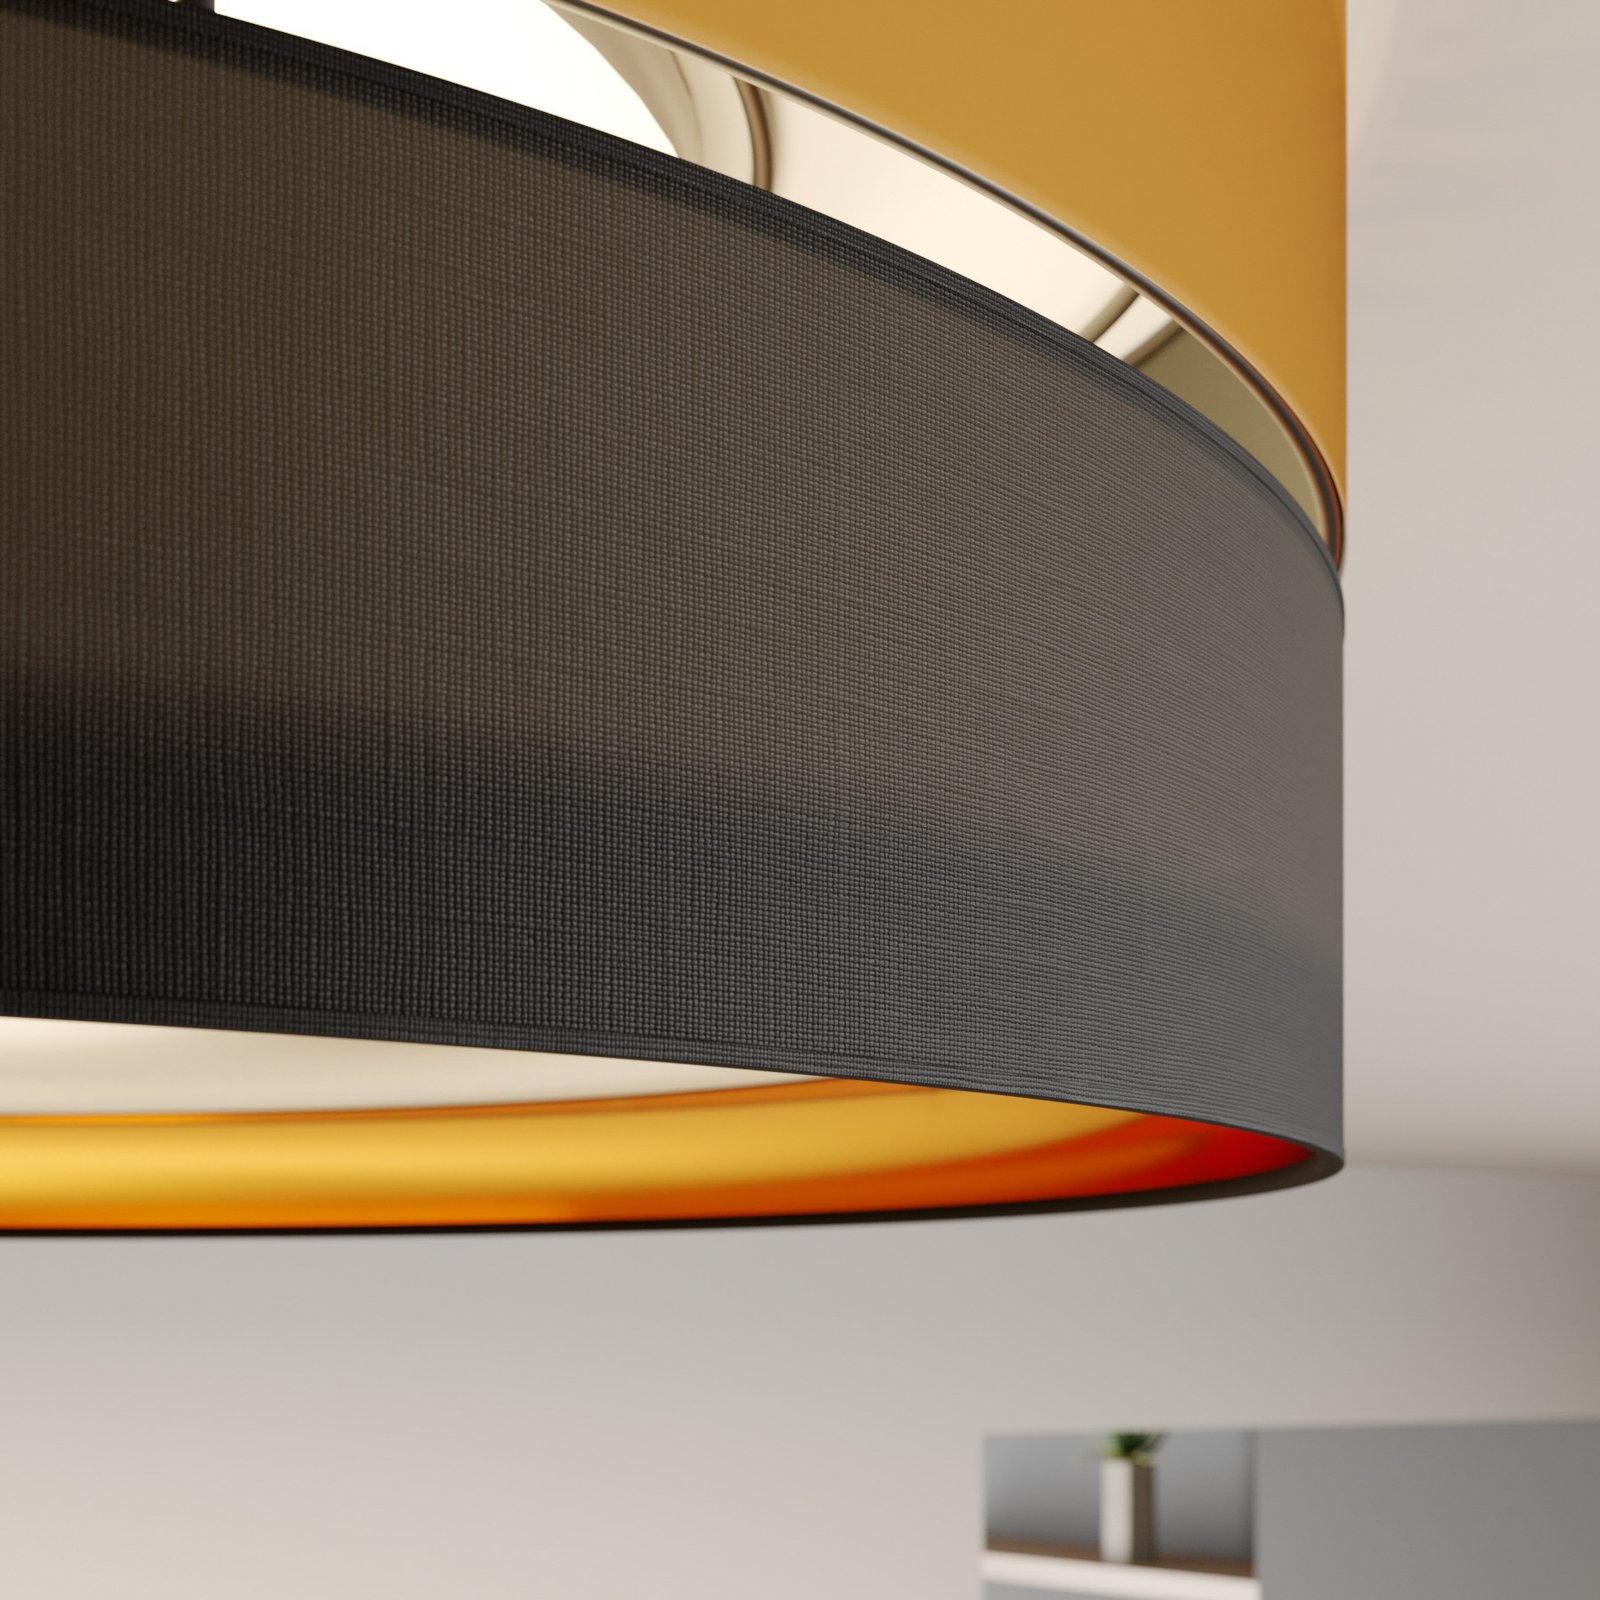 Hilton ceiling light, black/gold, Ø 60cm